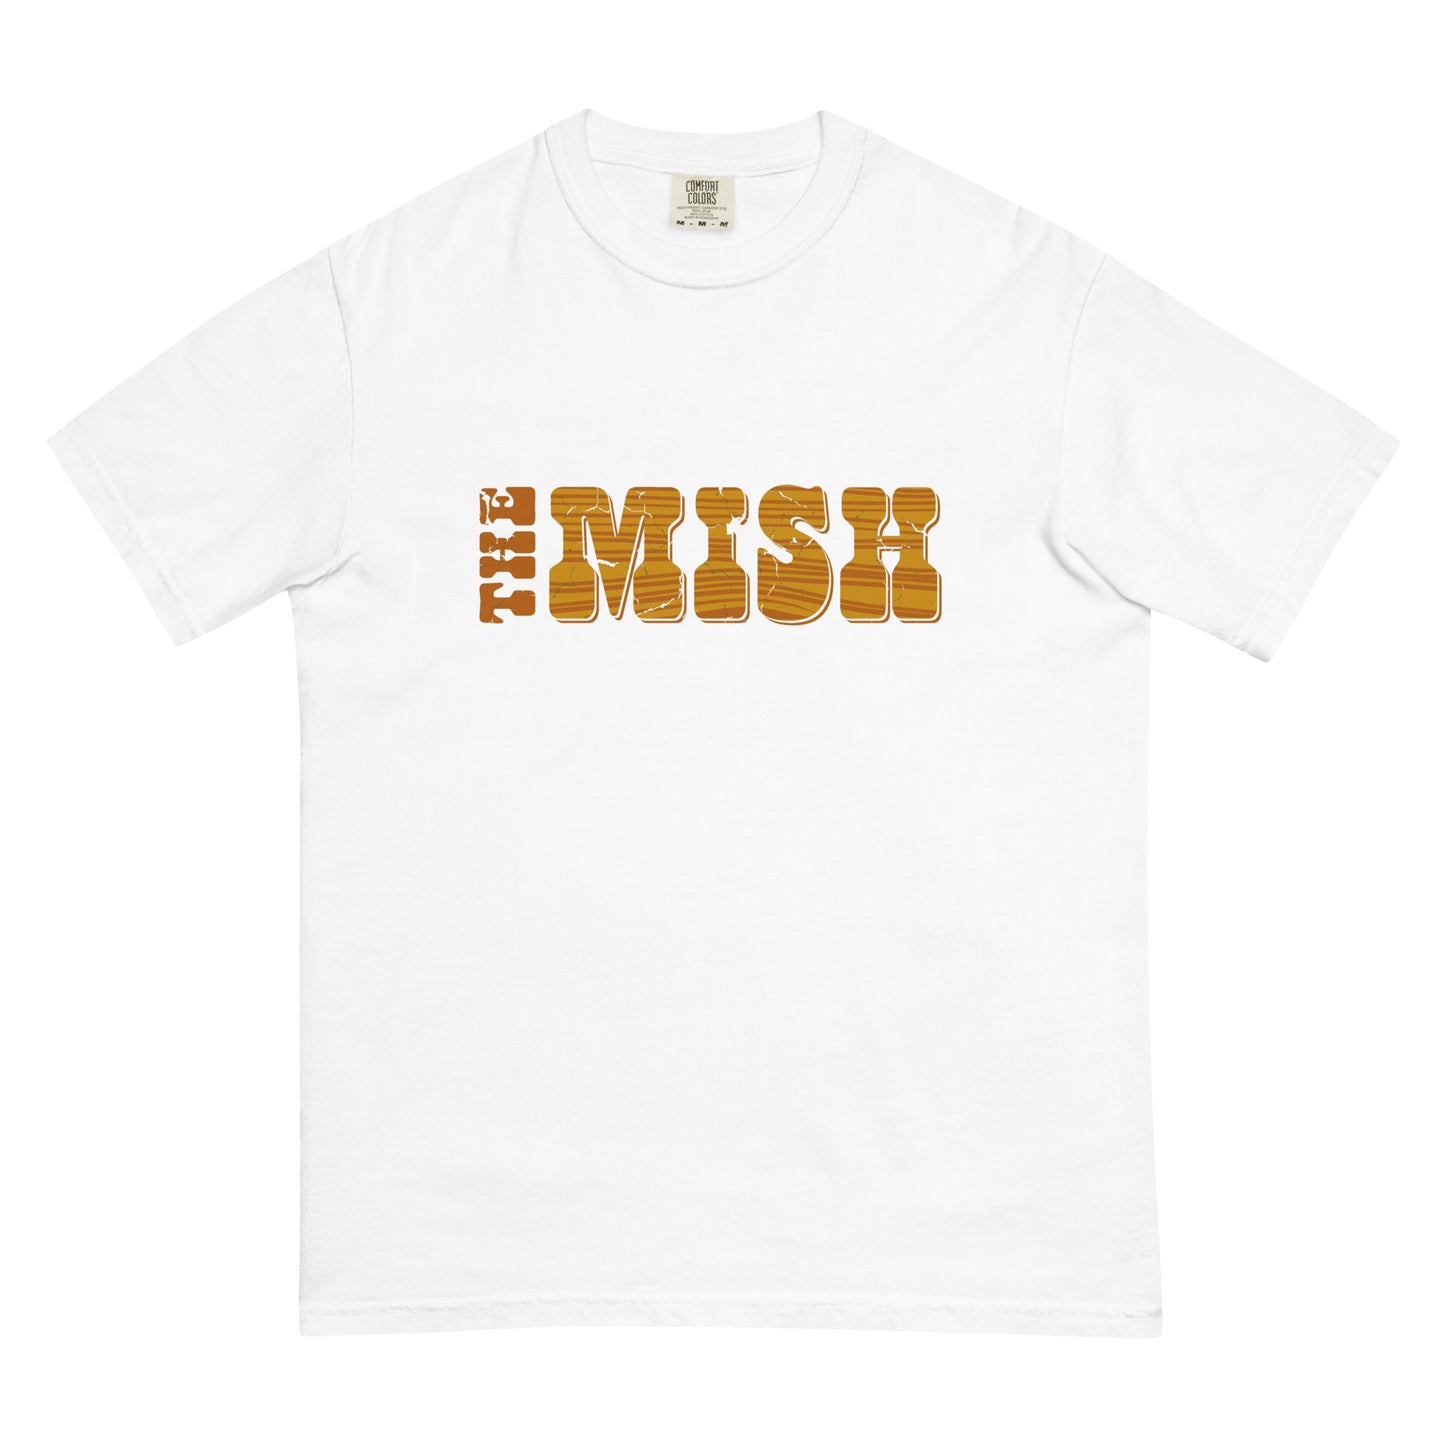 The Mish Wood Unisex T-Shirt